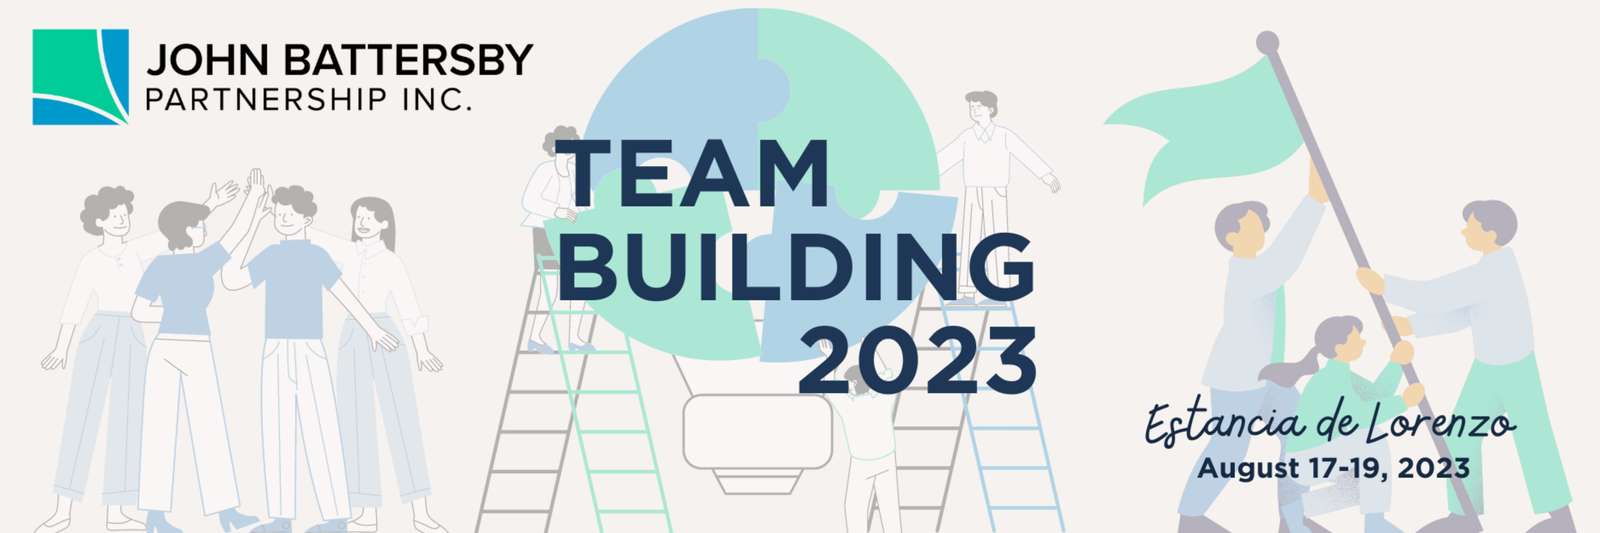 JBPI Team Building 2023 онлайн пазл